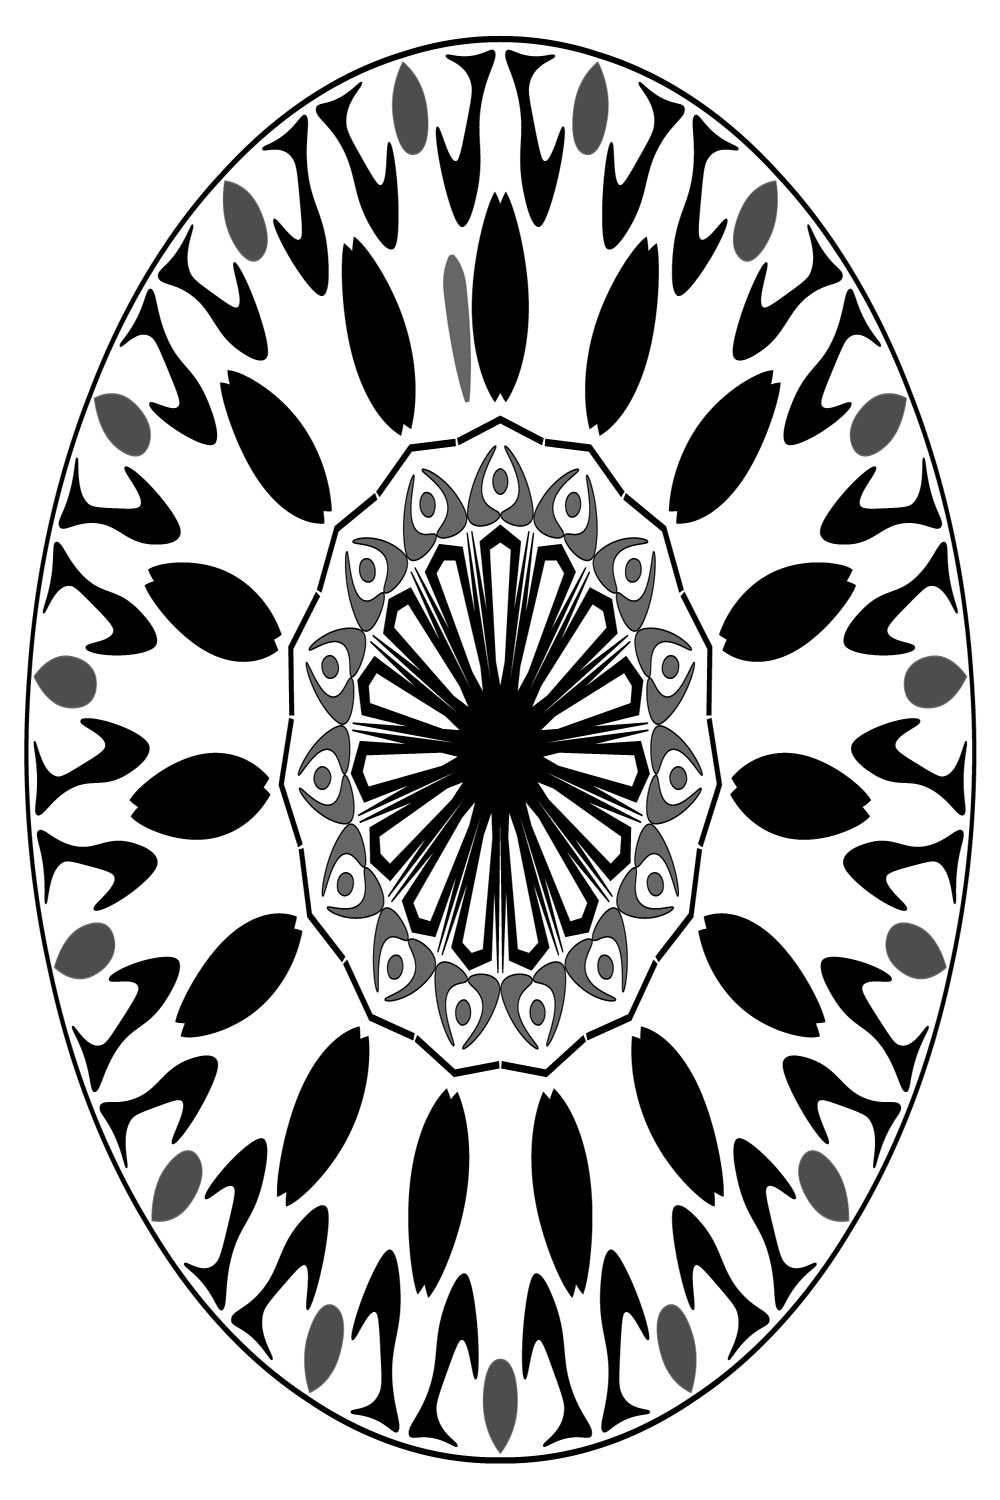 Mandala-art-with-fish-and-circuls pinterest preview image.